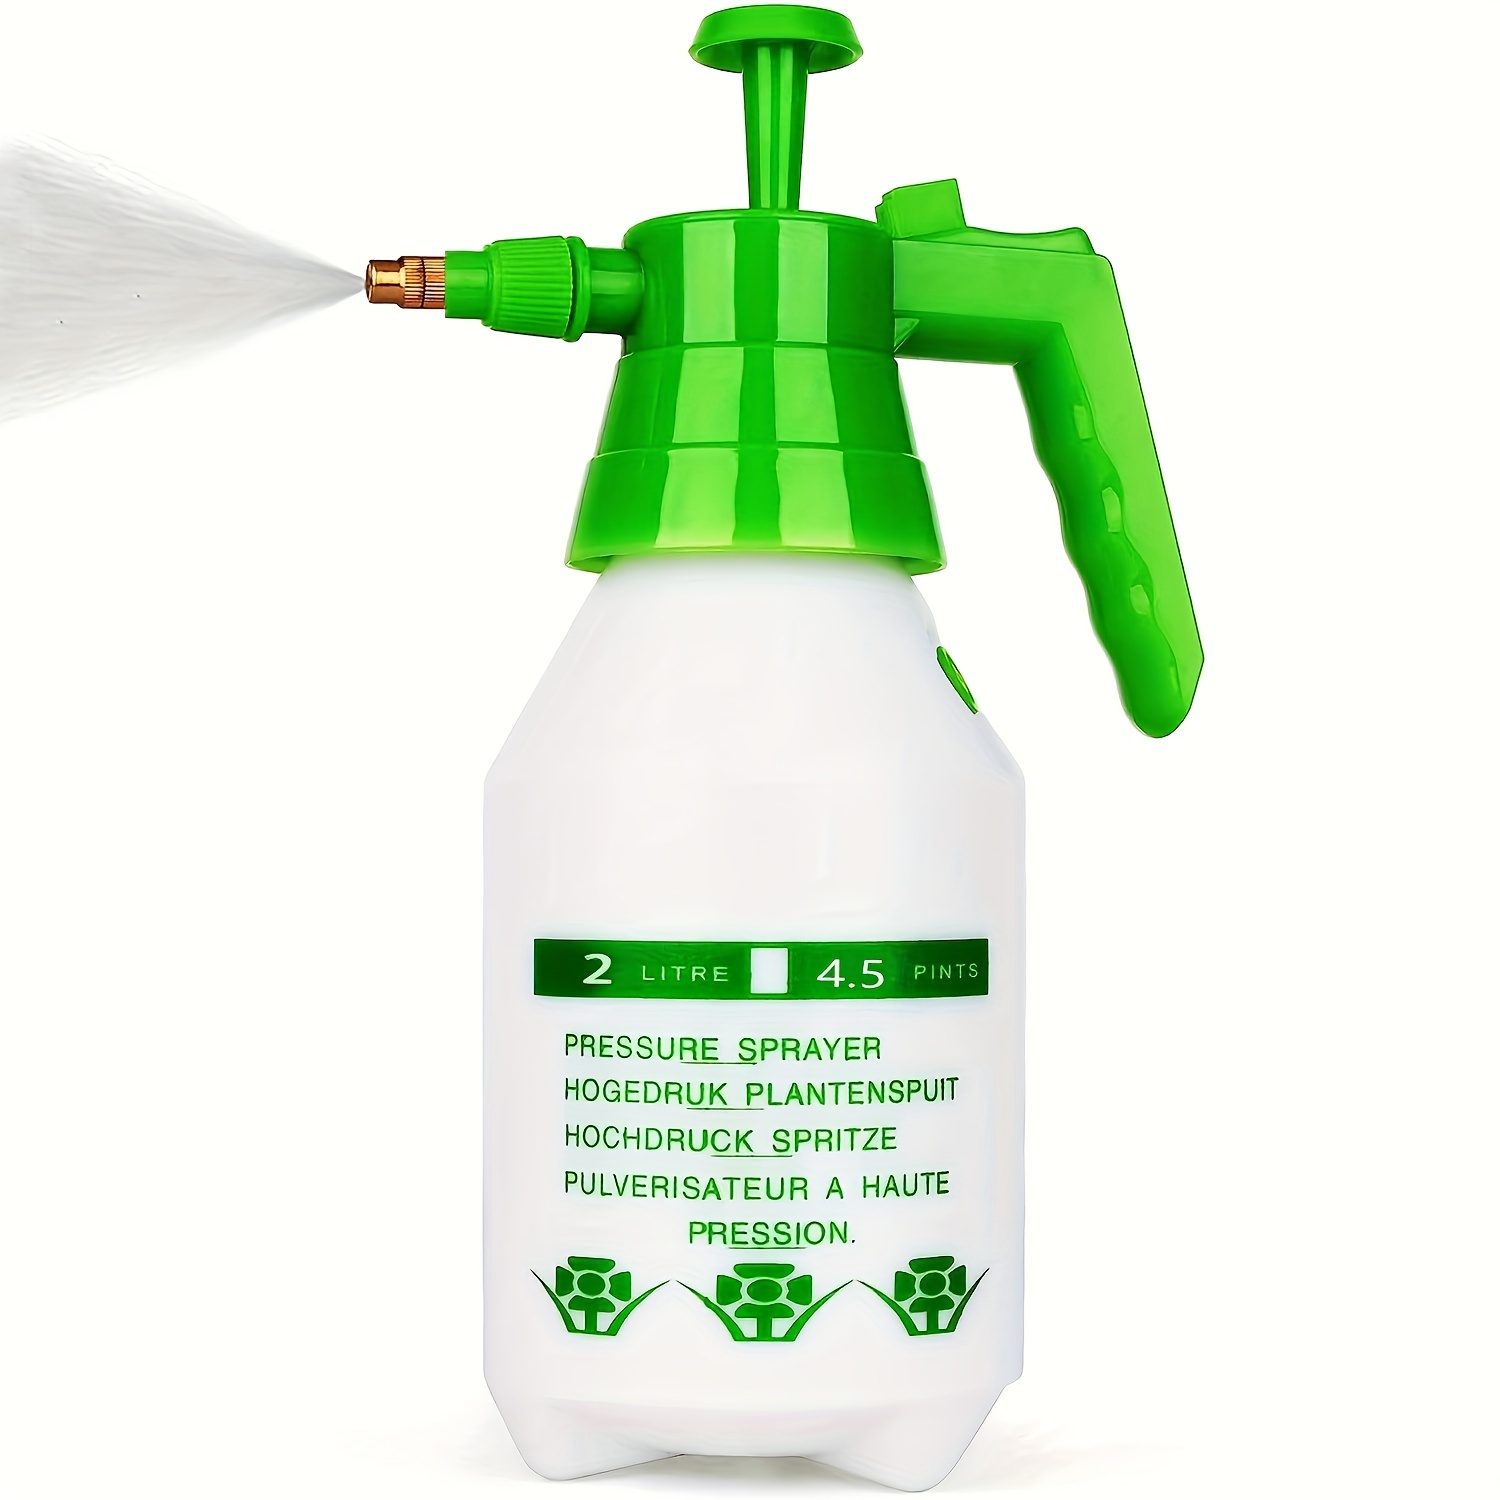 Buy Pressure sprayer online